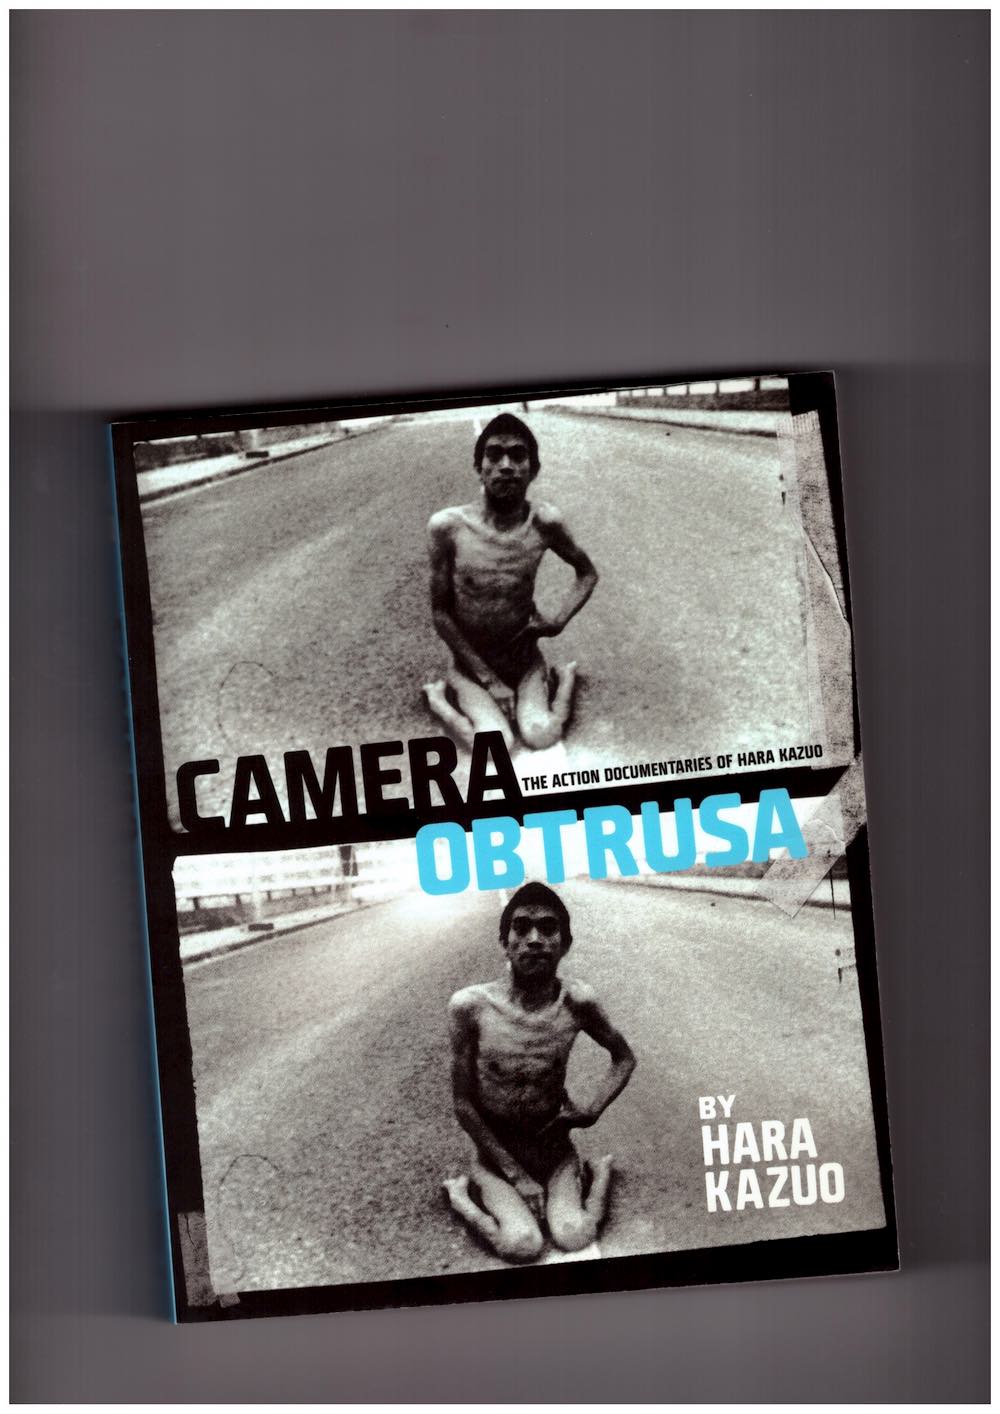 HARA, Kazuo - Camera Obtrusa: The Action Documentaries of Hara Kazuo